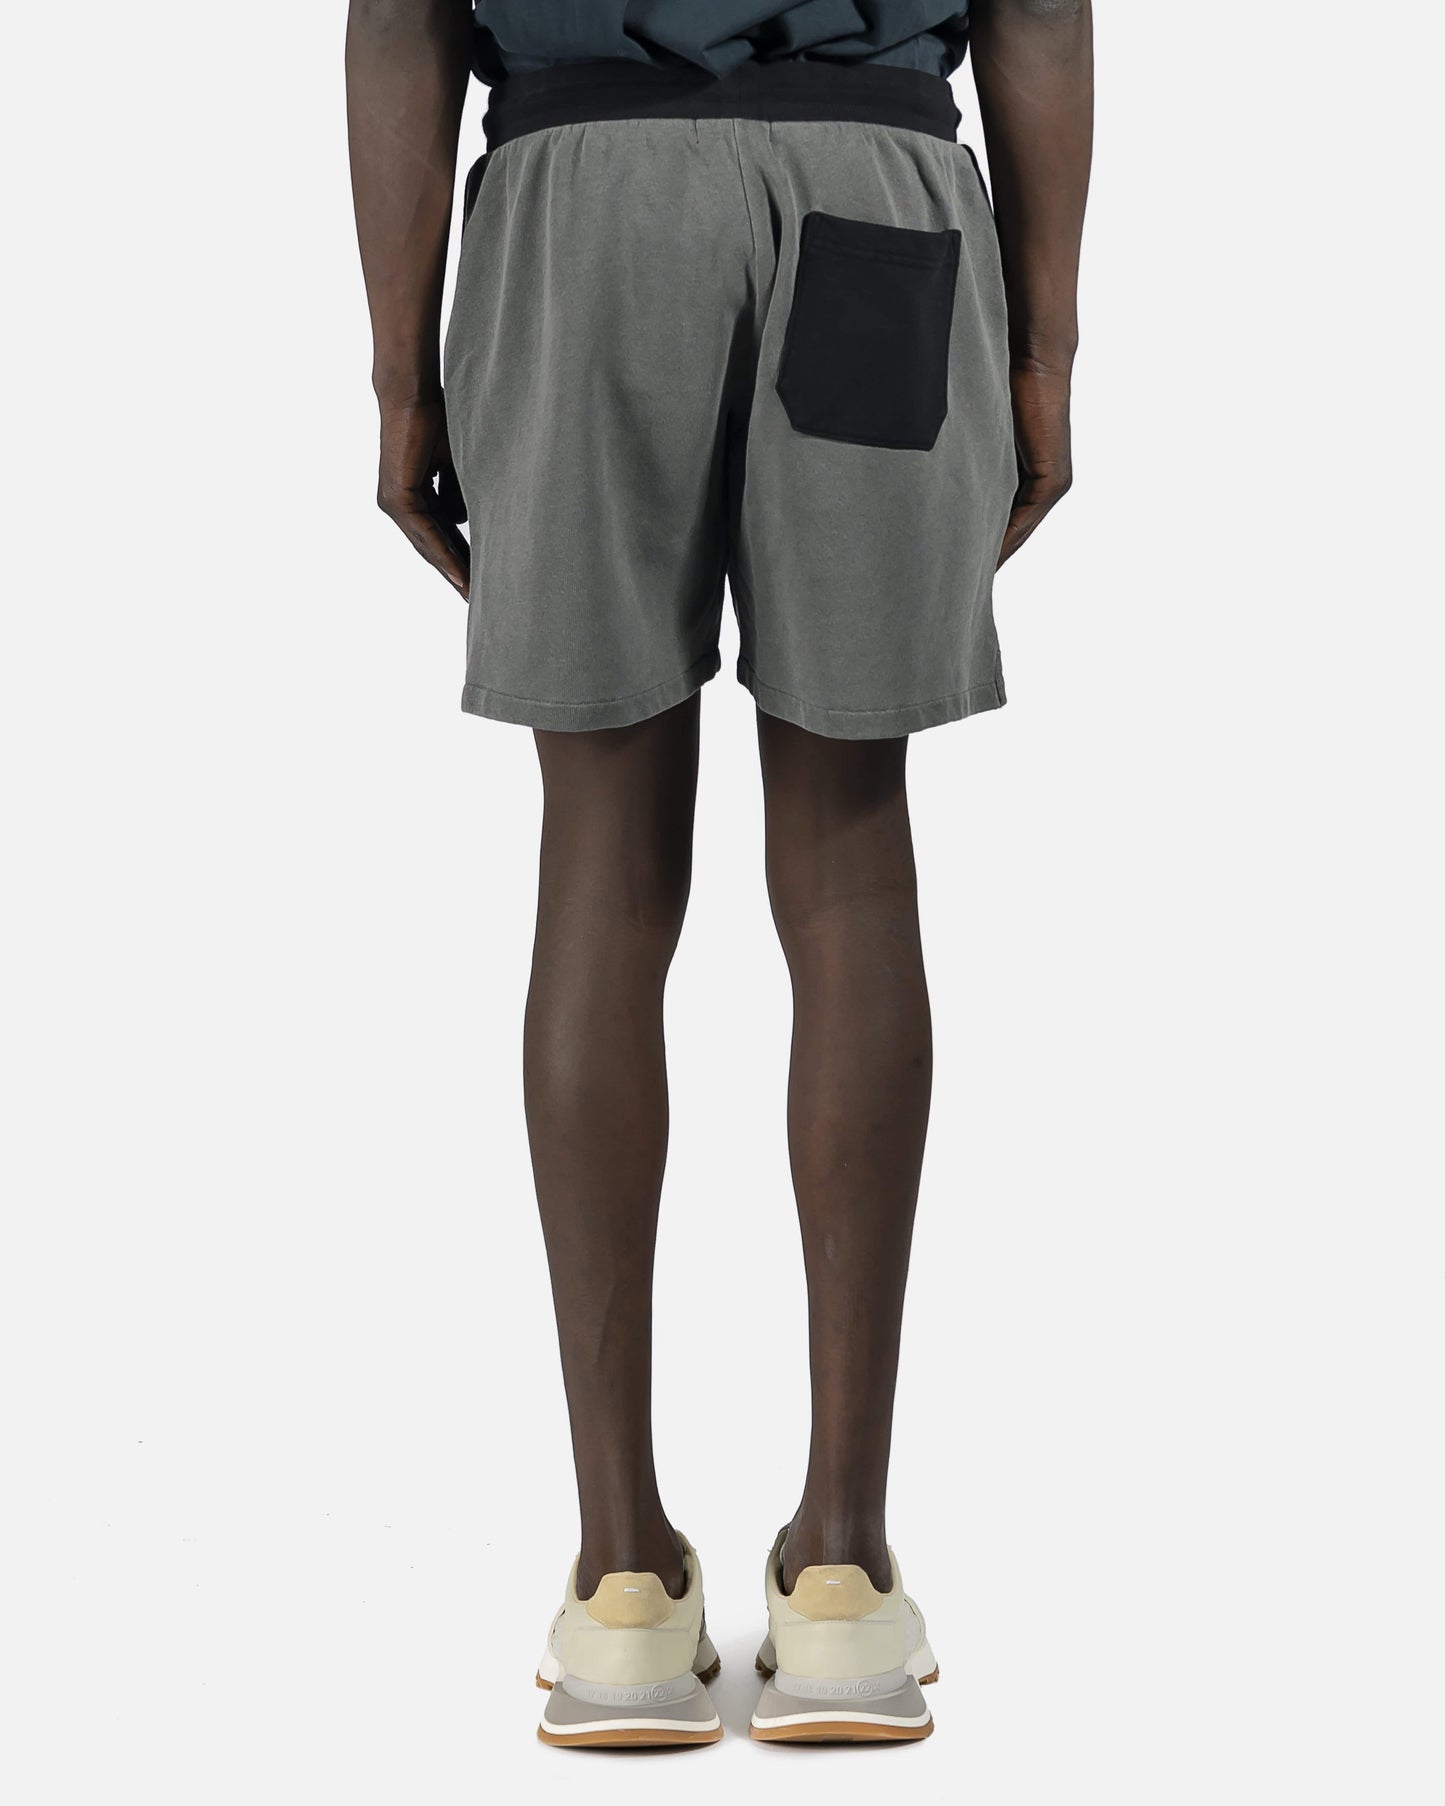 John Elliott Men's Shorts 1992 Shorts in Grey/Black